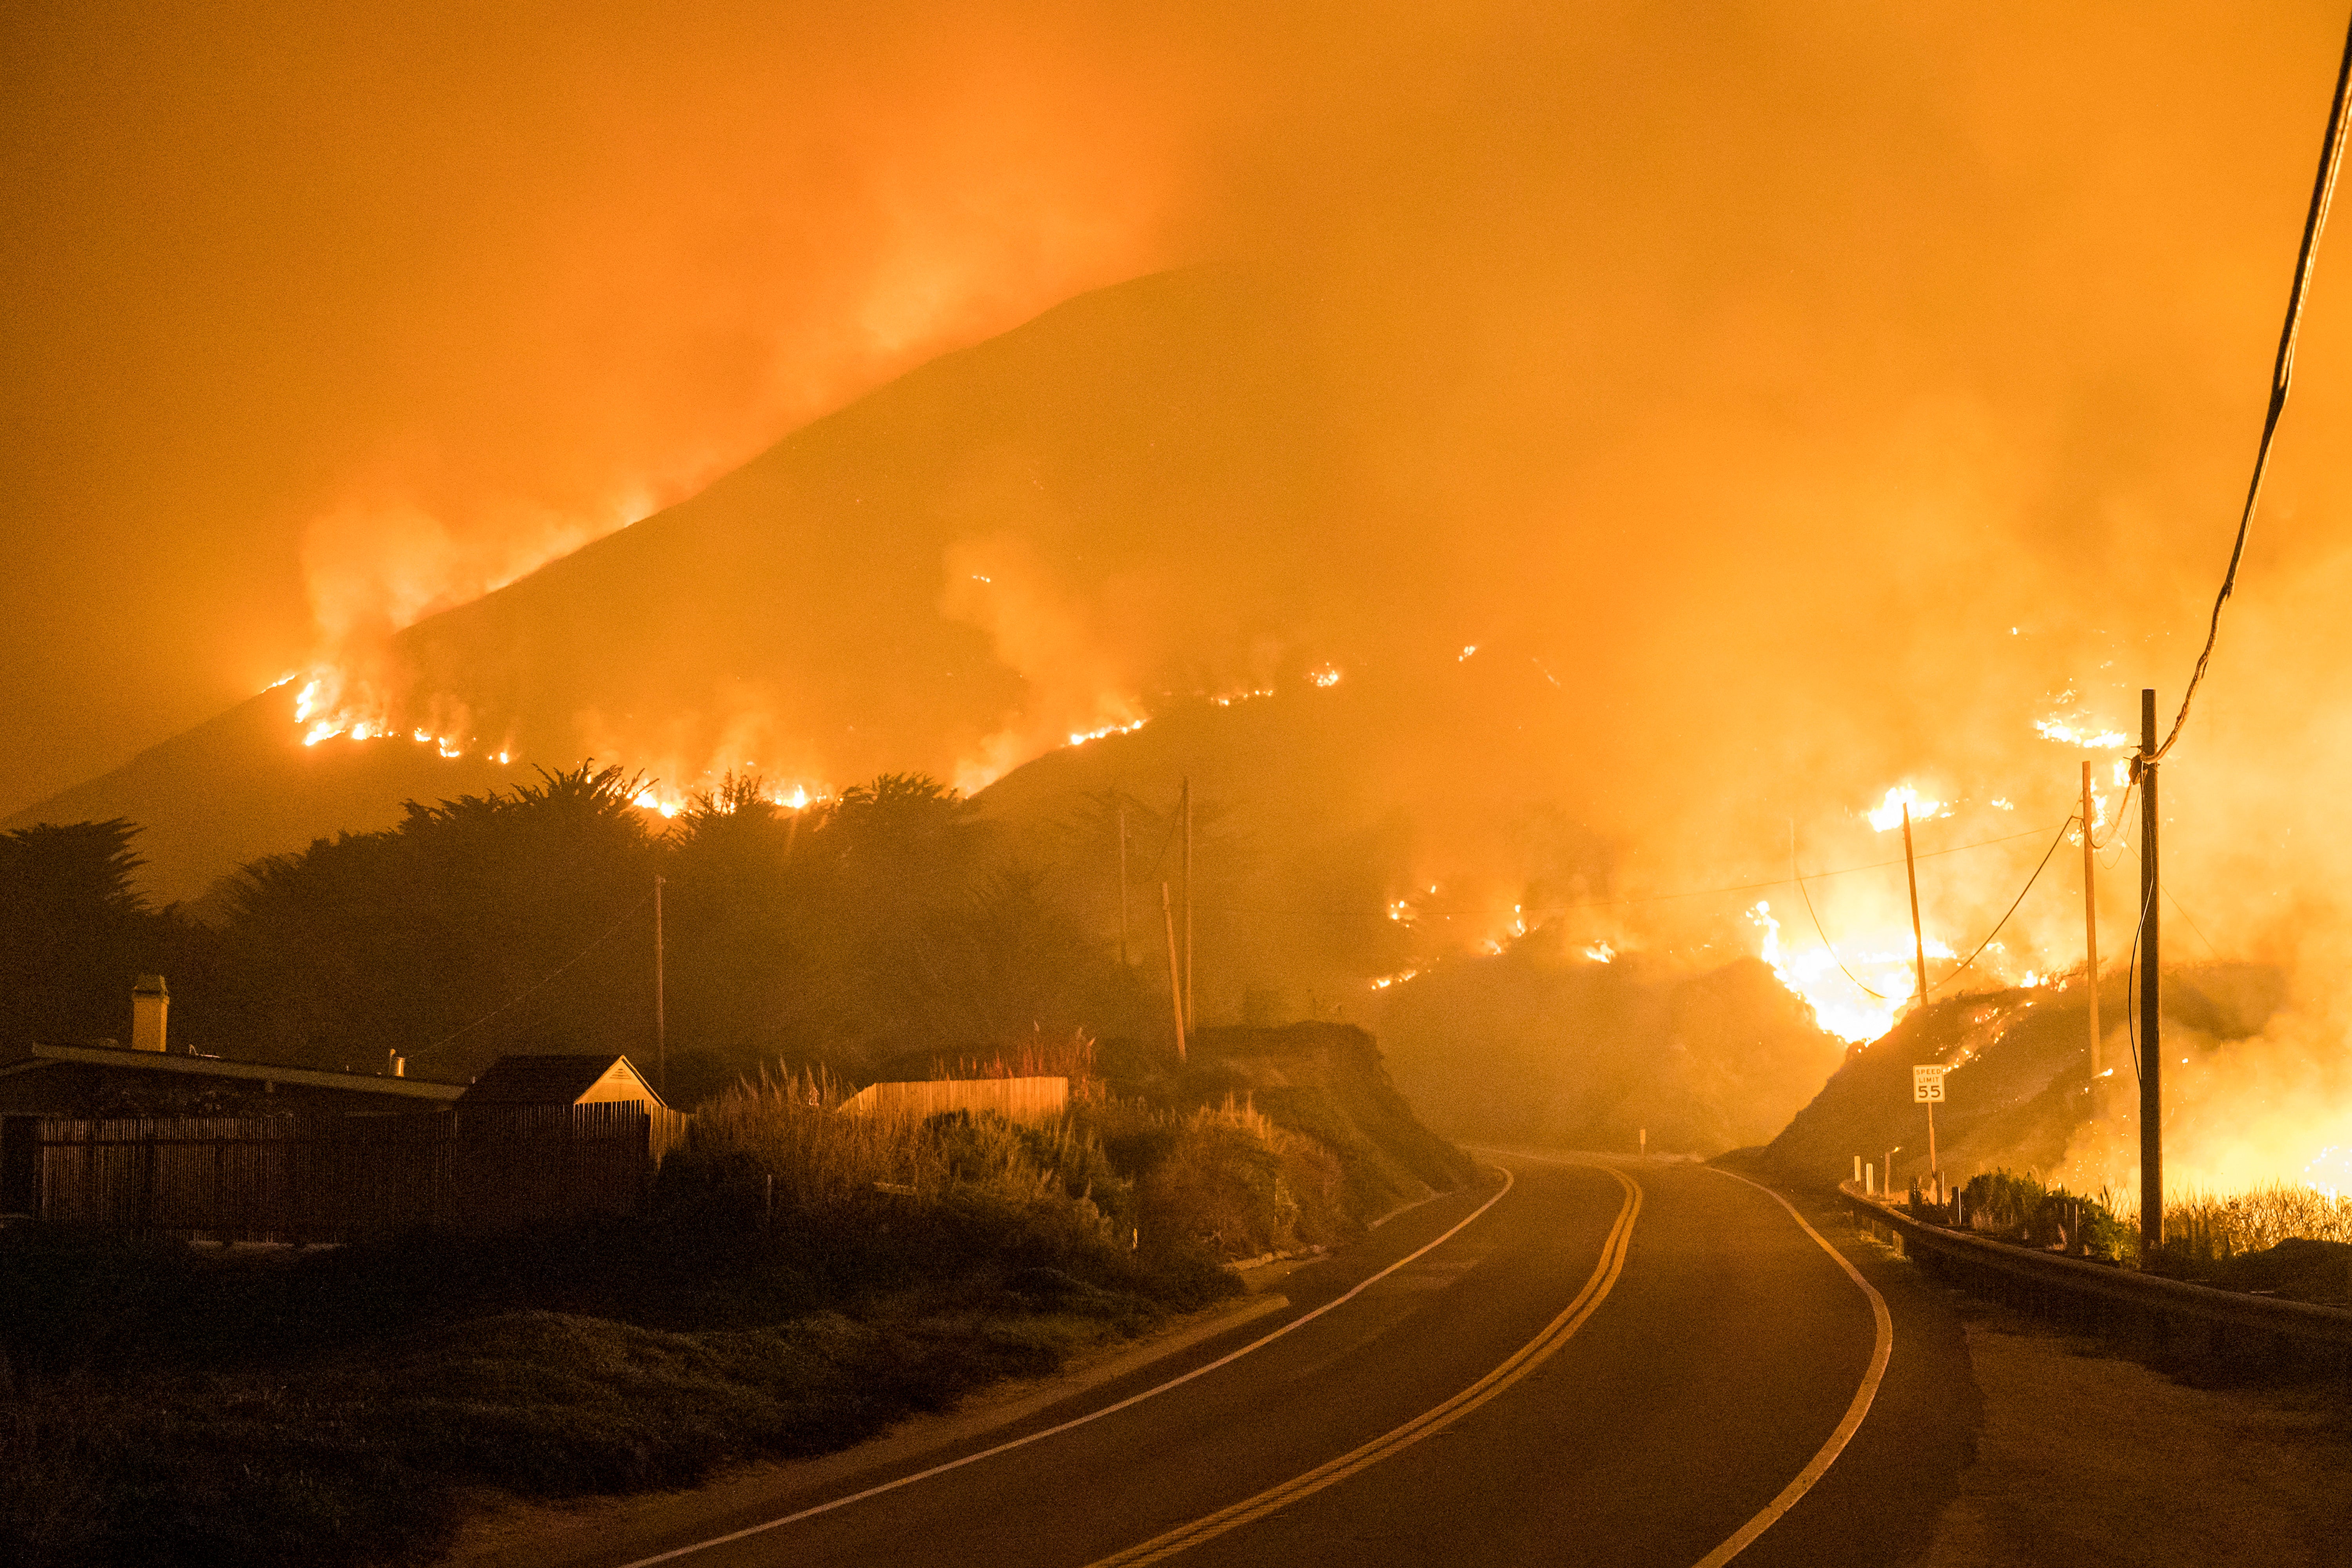 The Colorado Fire burns along Highway 1 near Big Sur, California on 22 January 2022